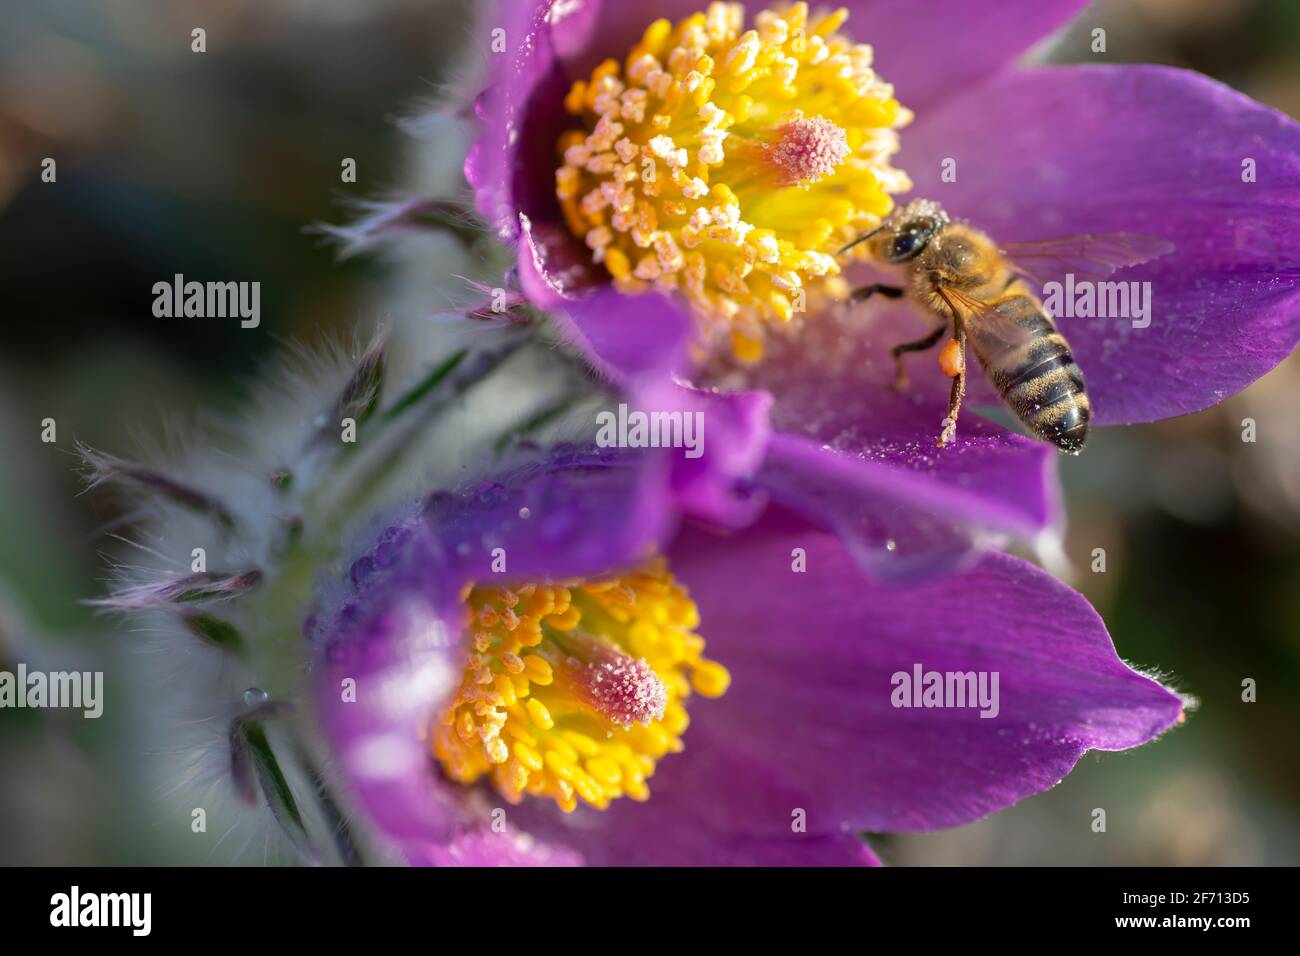 Honey Bee collecting nectar from Purple Crocus (Crocus sativus)  flowers  in the garden. Close up. Macro. Stock Photo